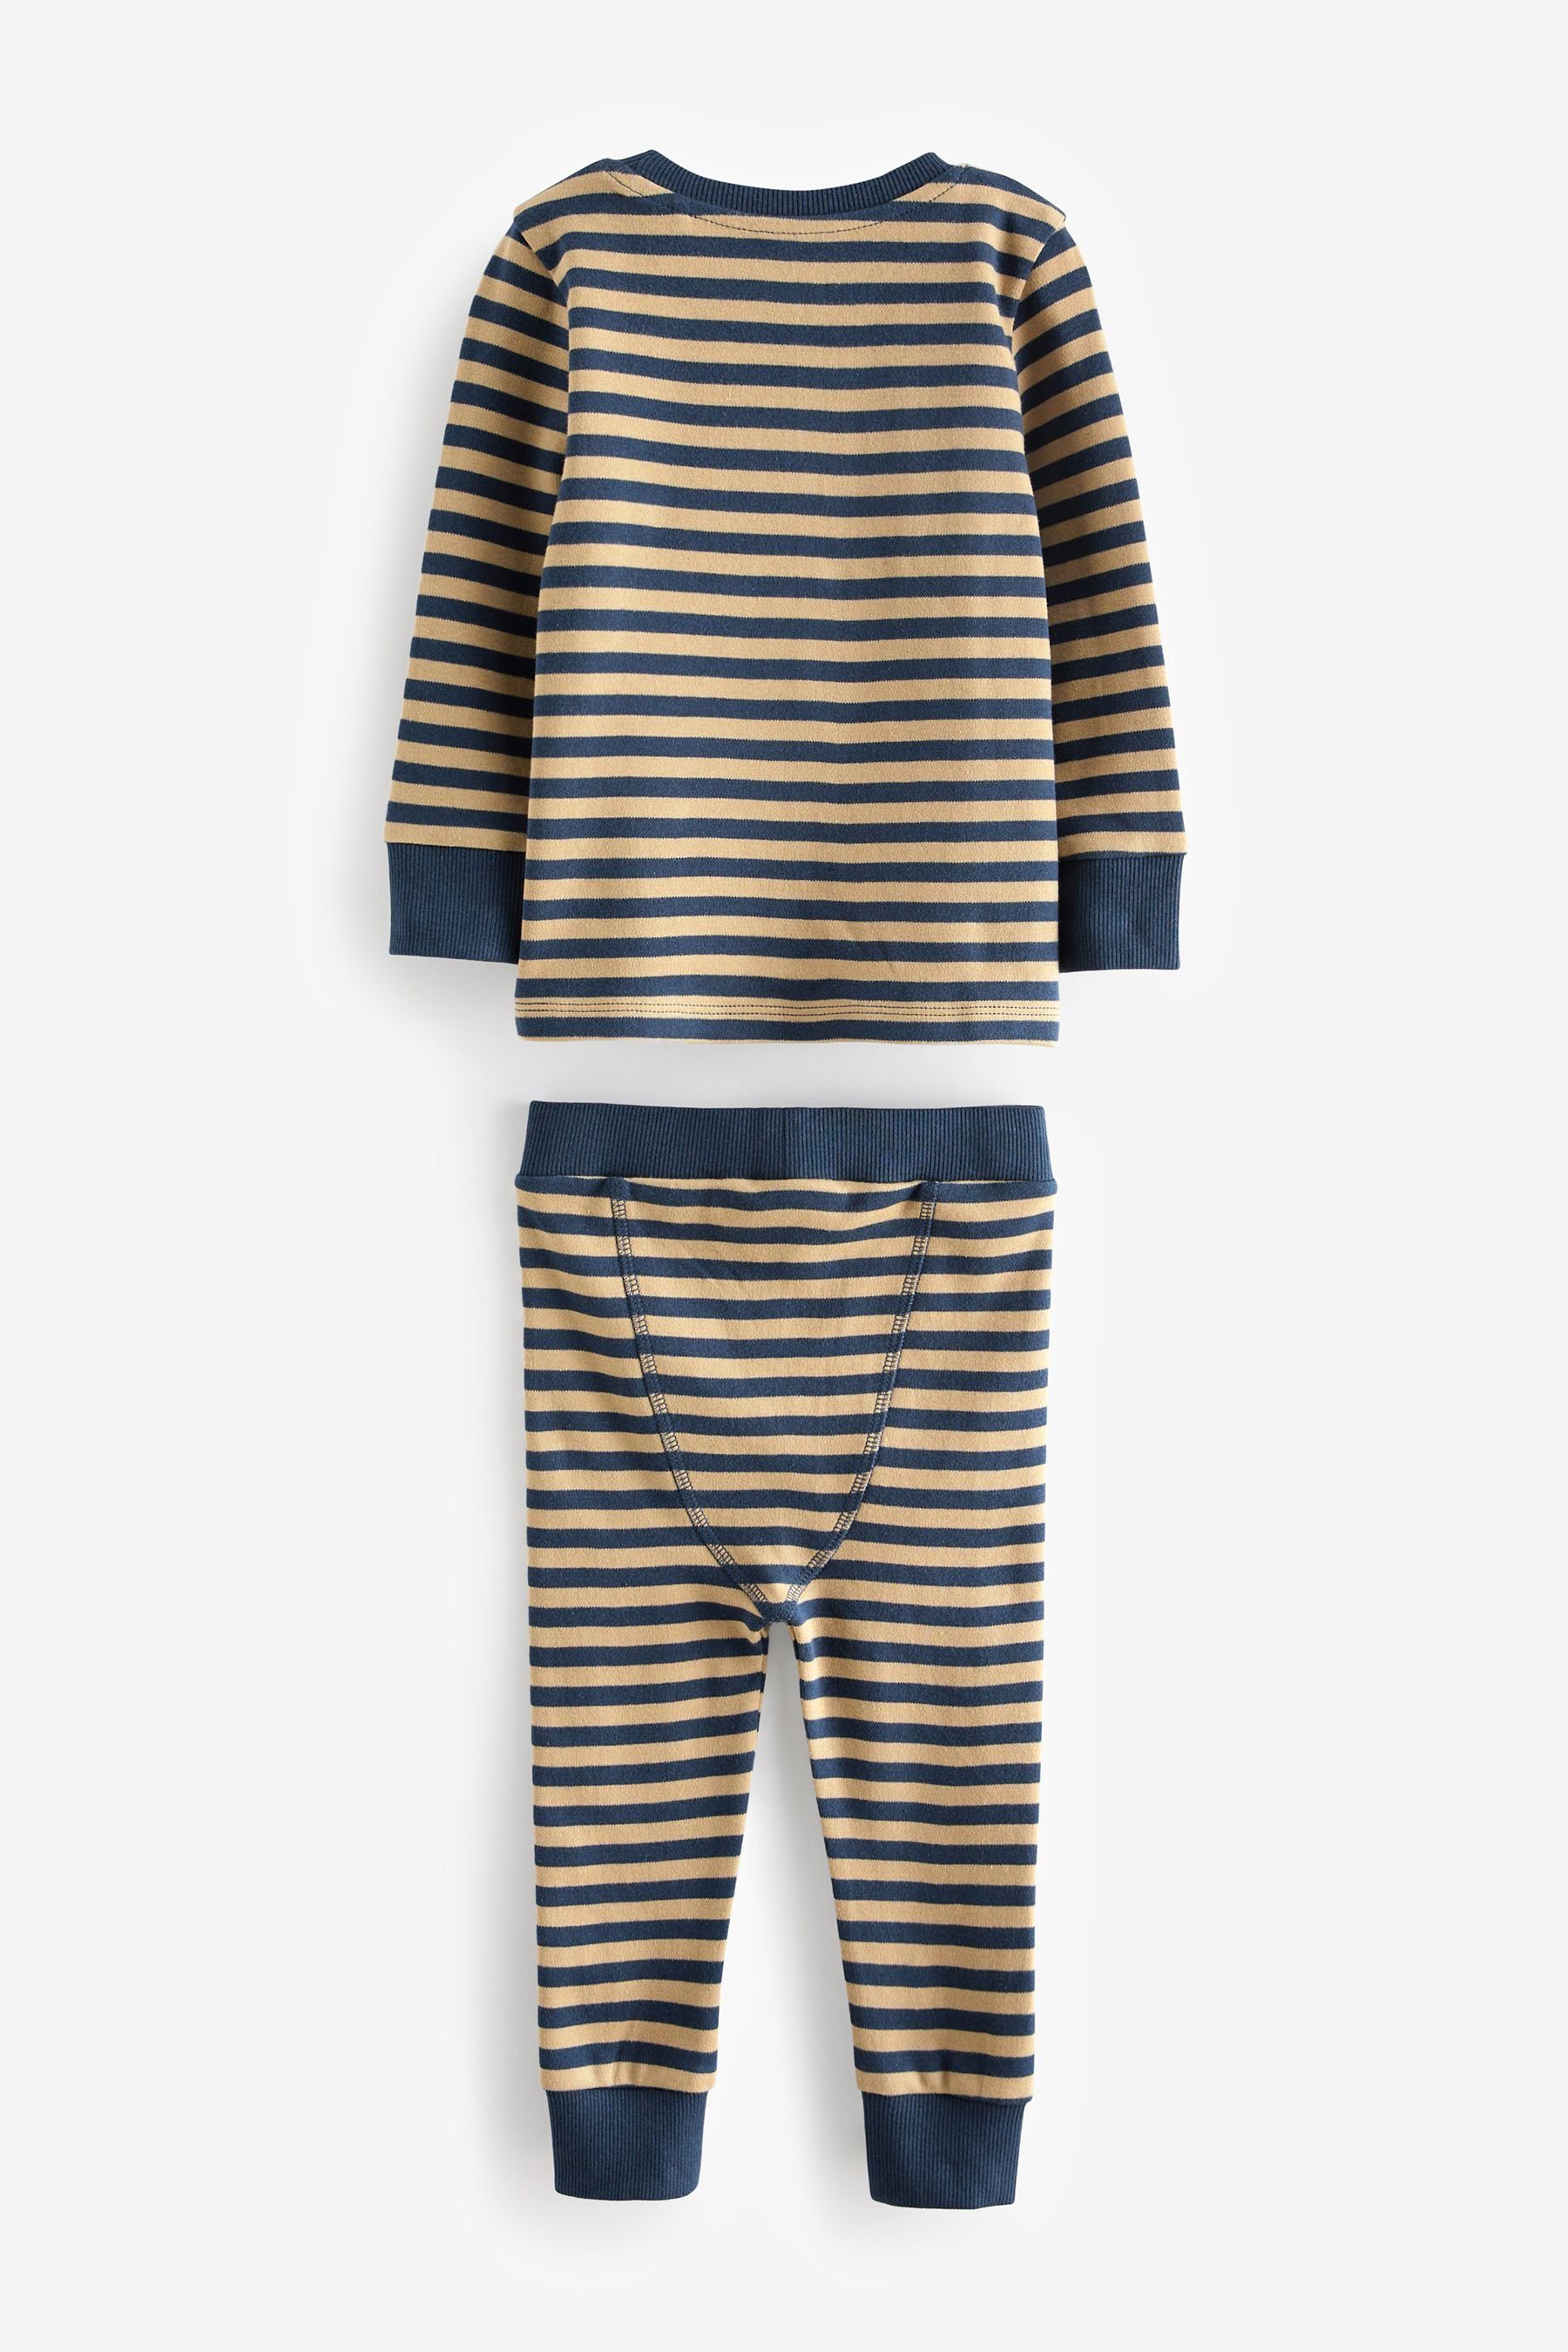 Next (6 Transport 3er-Pack Brown/Blue Pyjama tlg) Schlafanzüge Snuggle